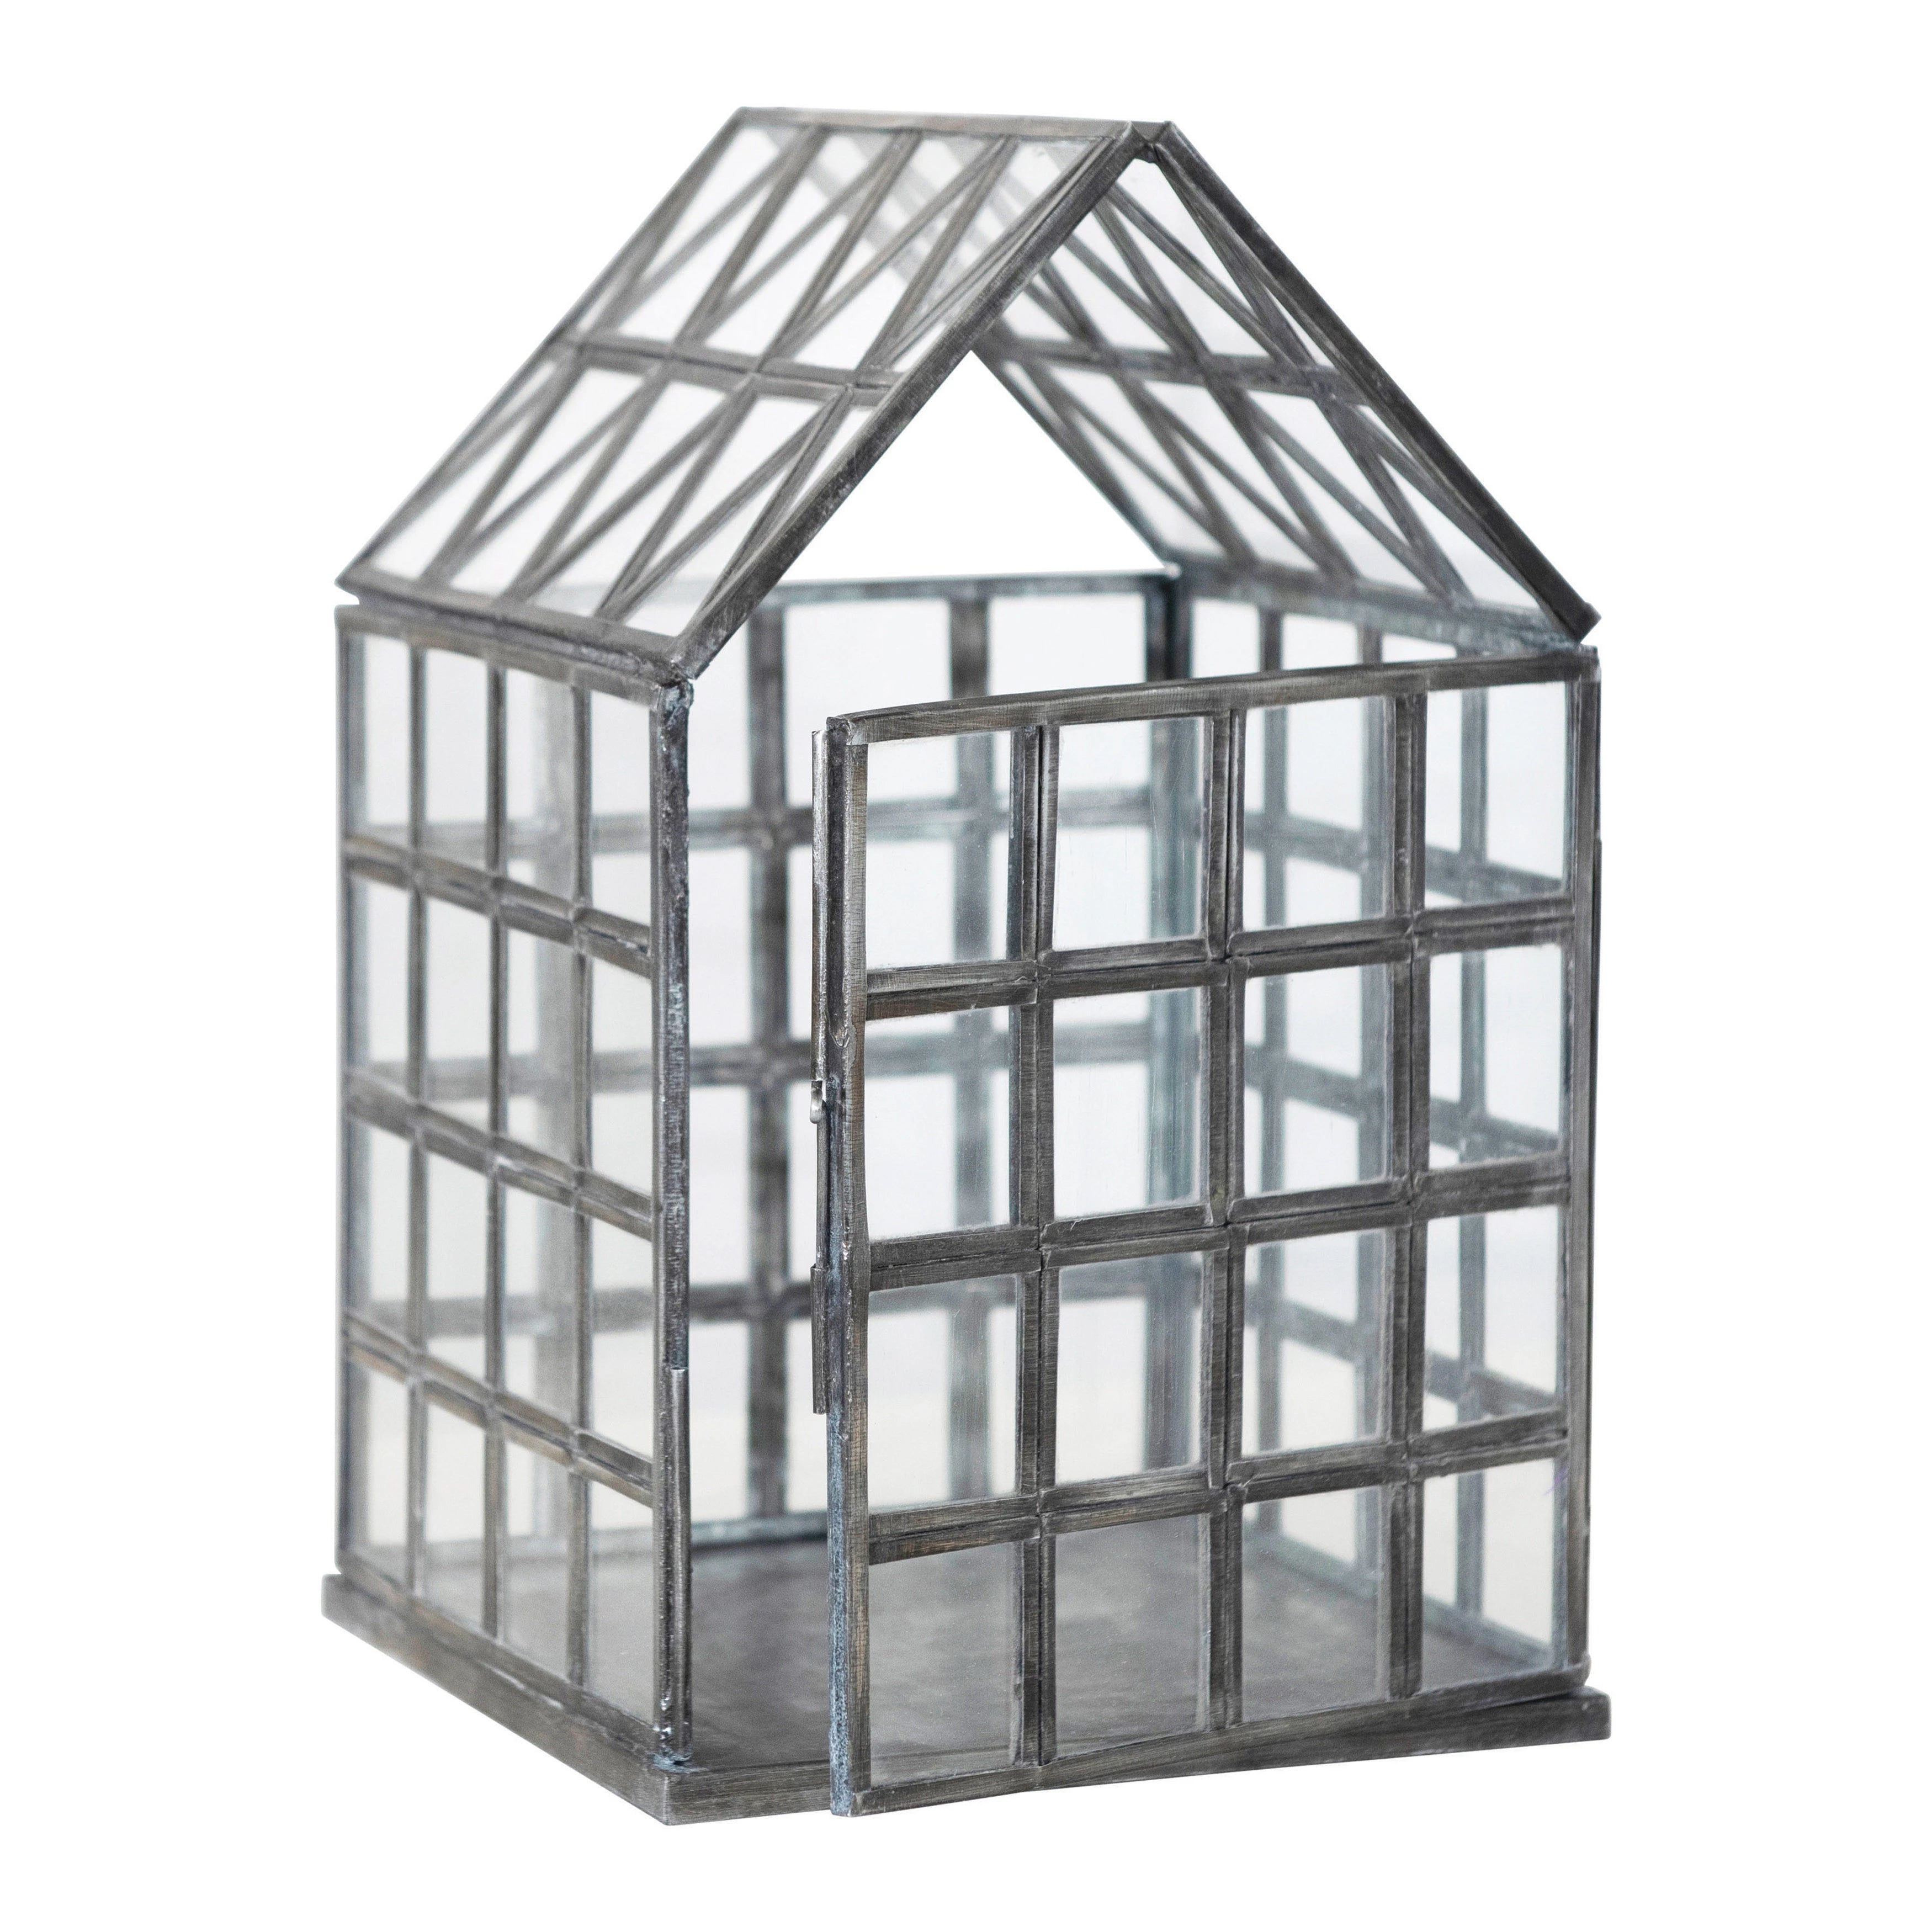 Metal and Glass Greenhouse Terrarium, Zinc Finish